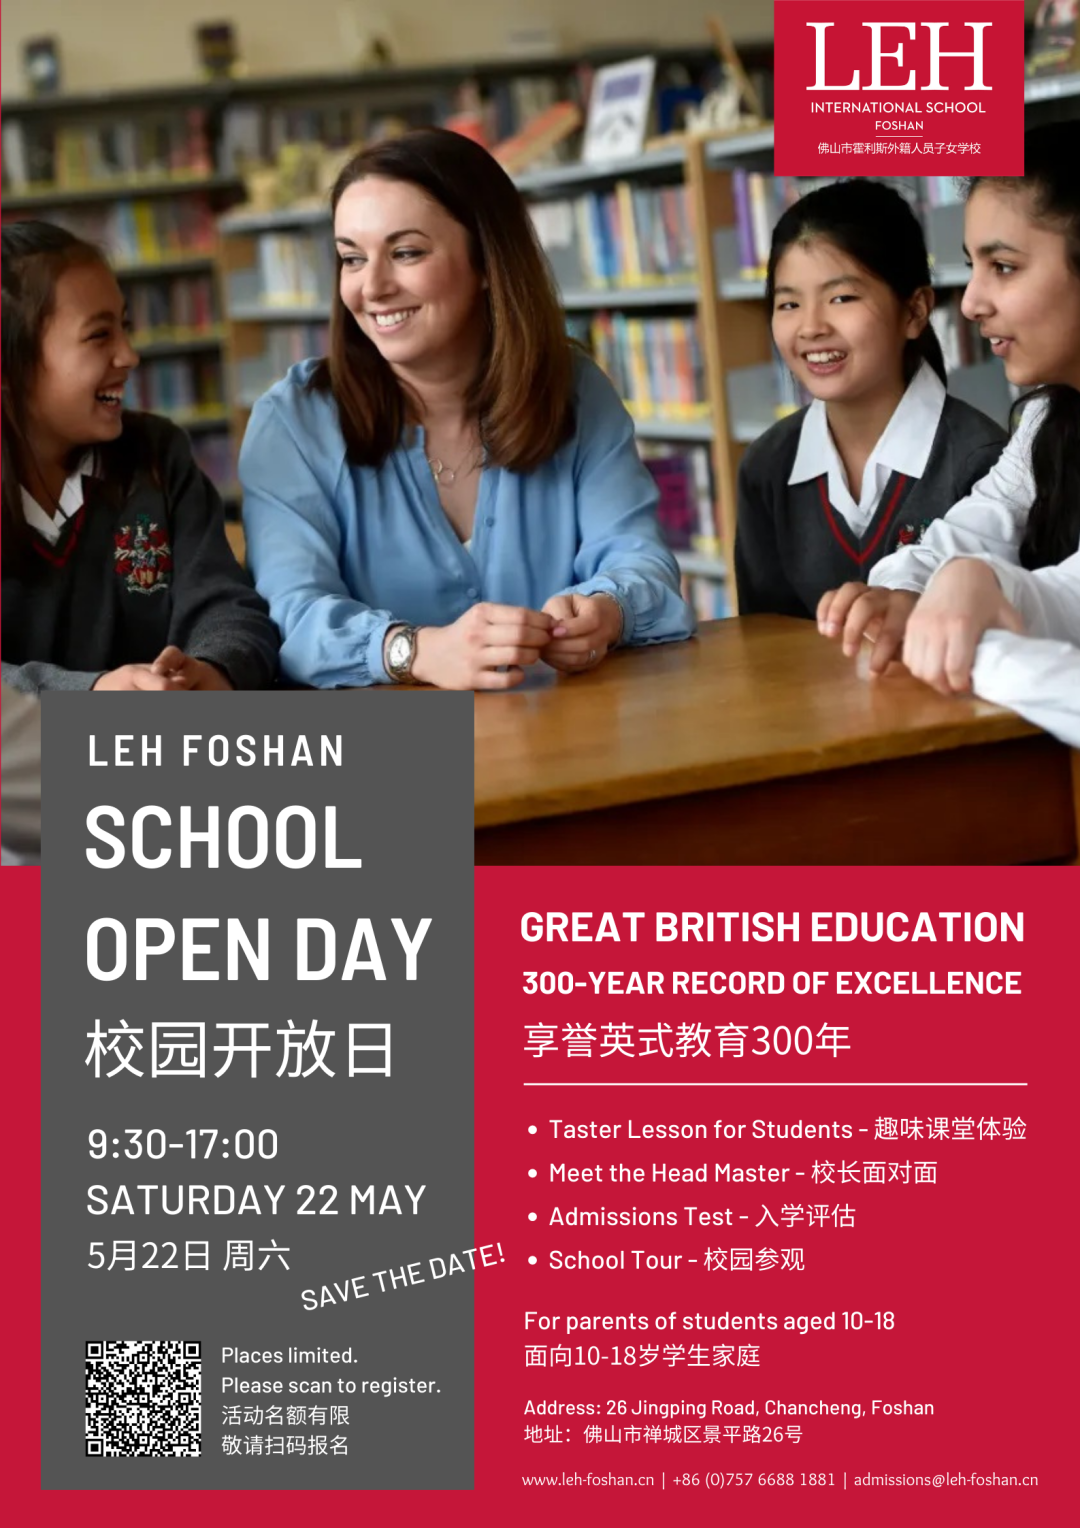 LEH School Open Day | 5月22日，零距离感受英式校园魅力